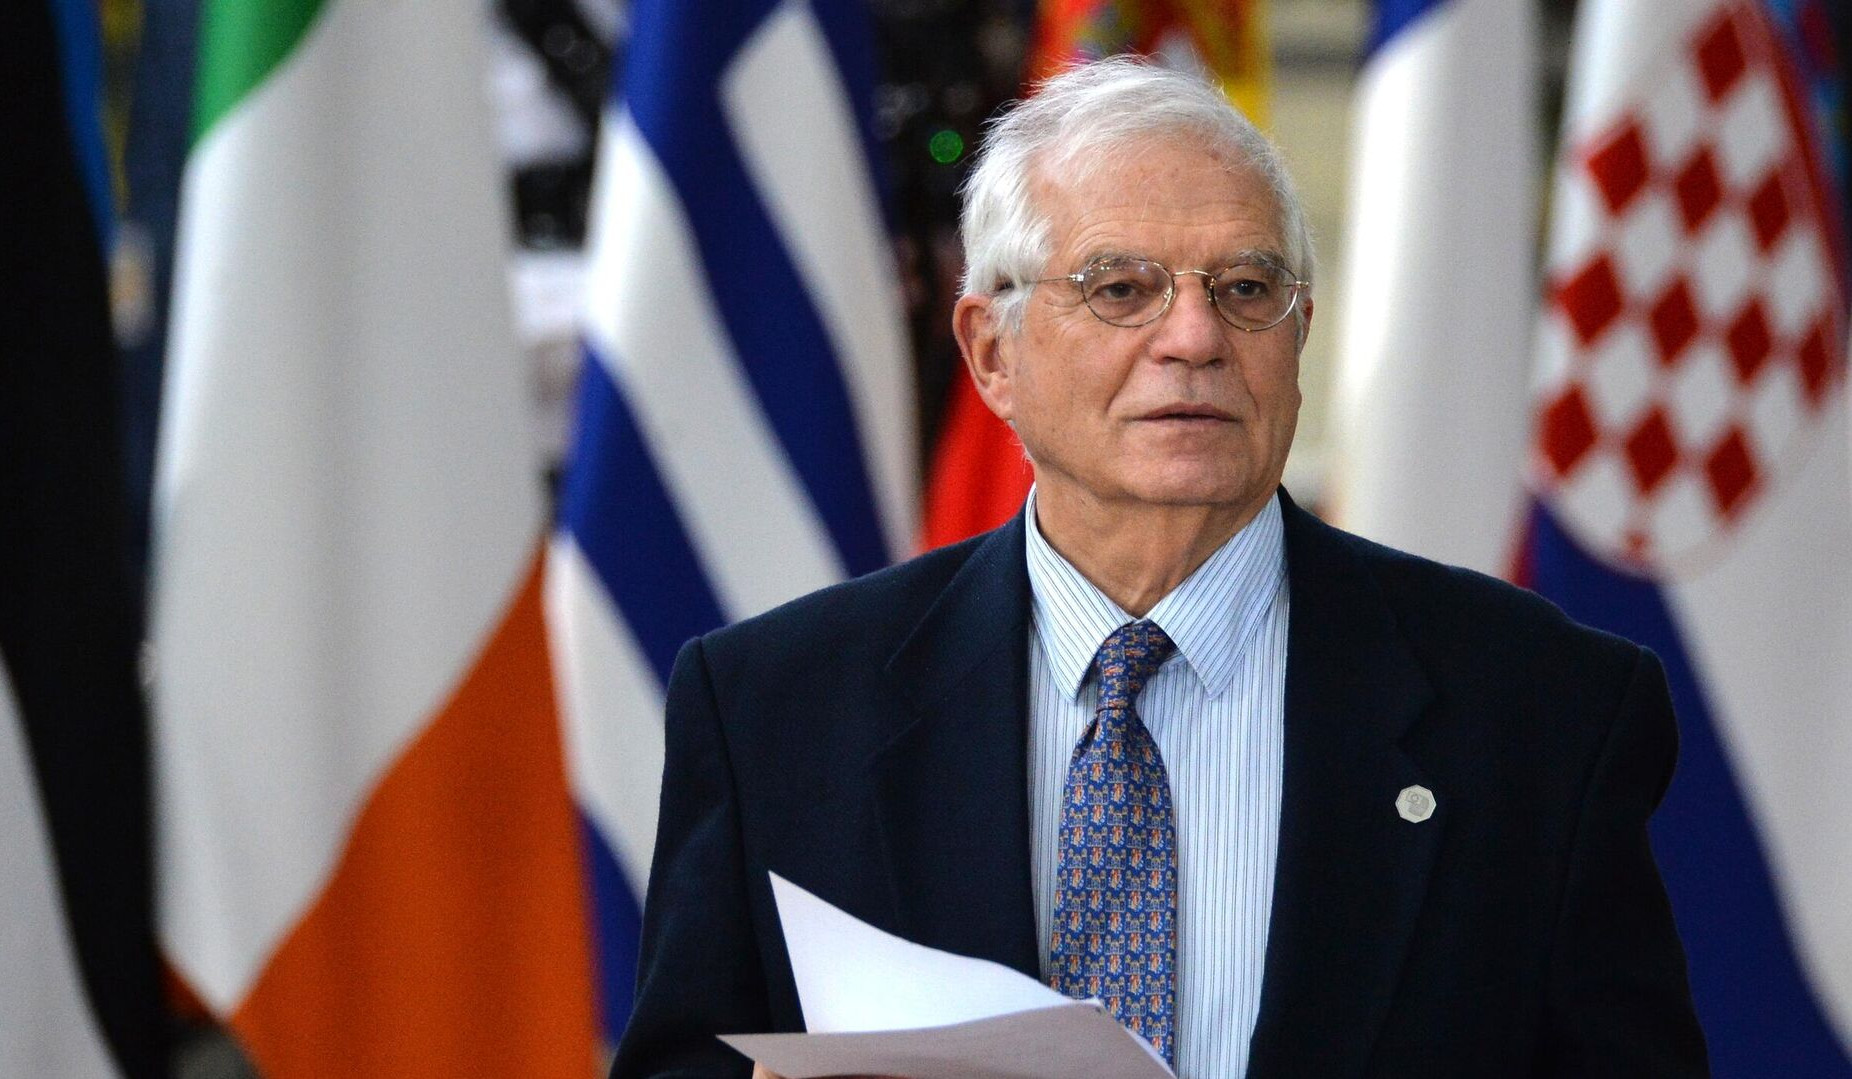 Serbia and Kosovo to start negotiations with EU mediation, Borrell says